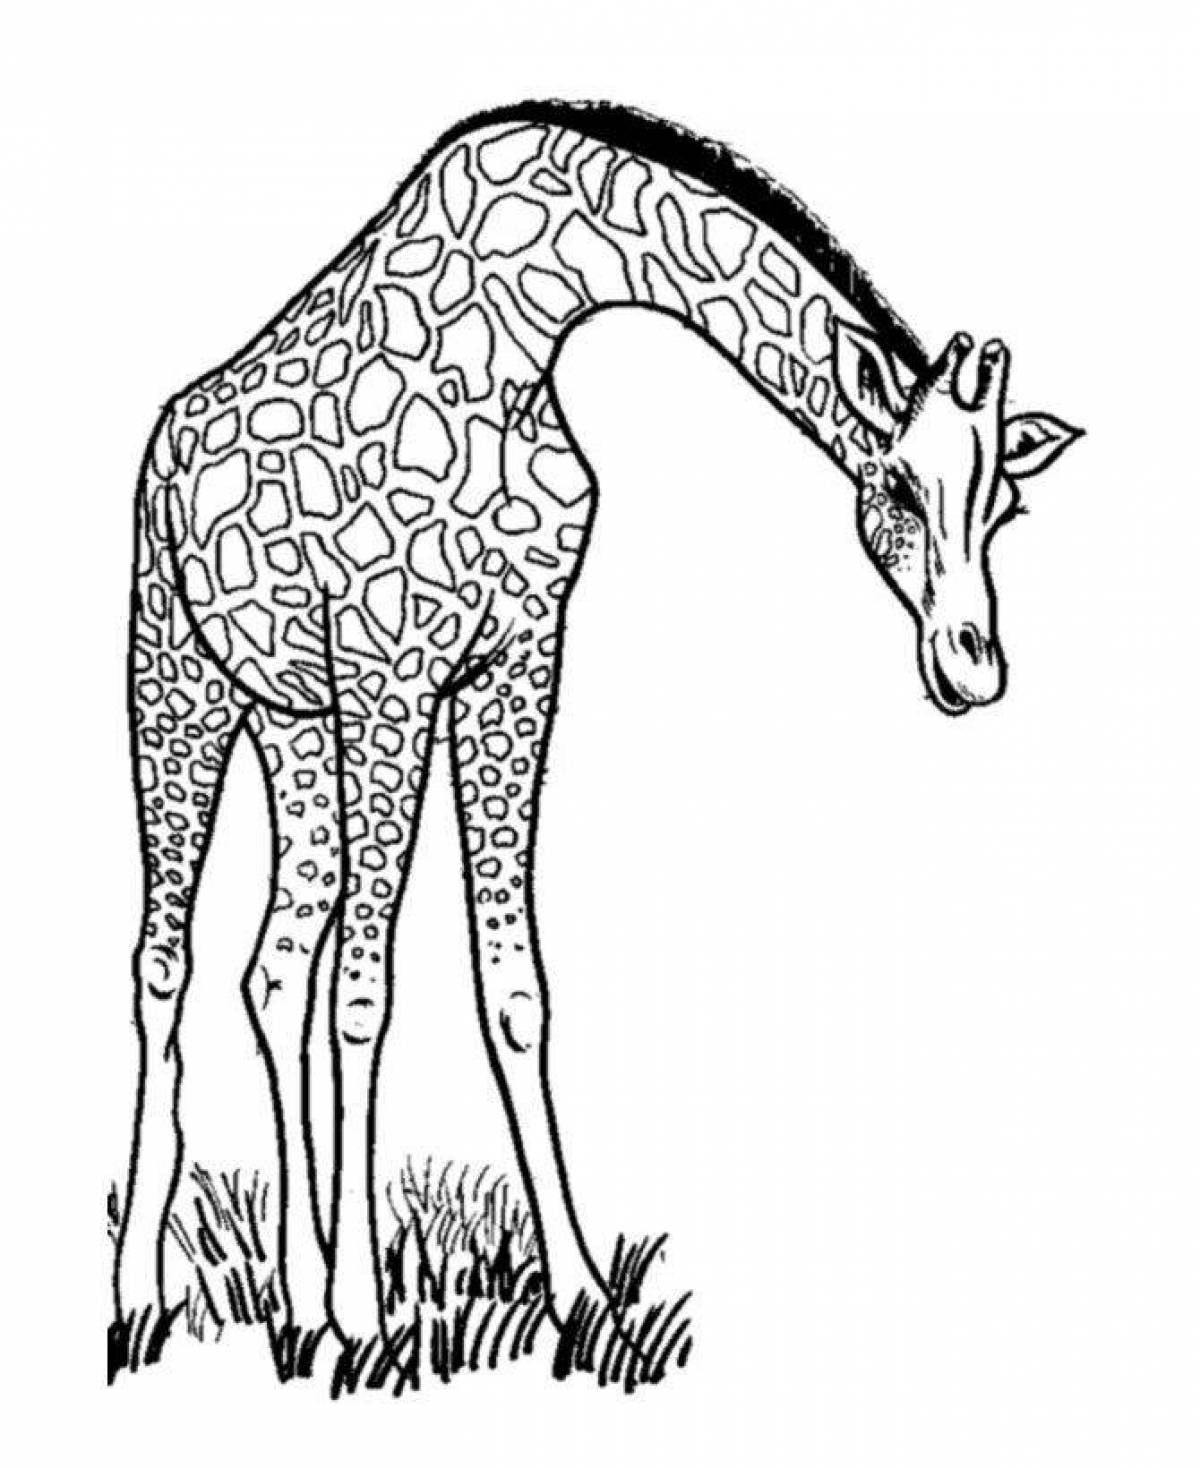 Joyful giraffe drawing